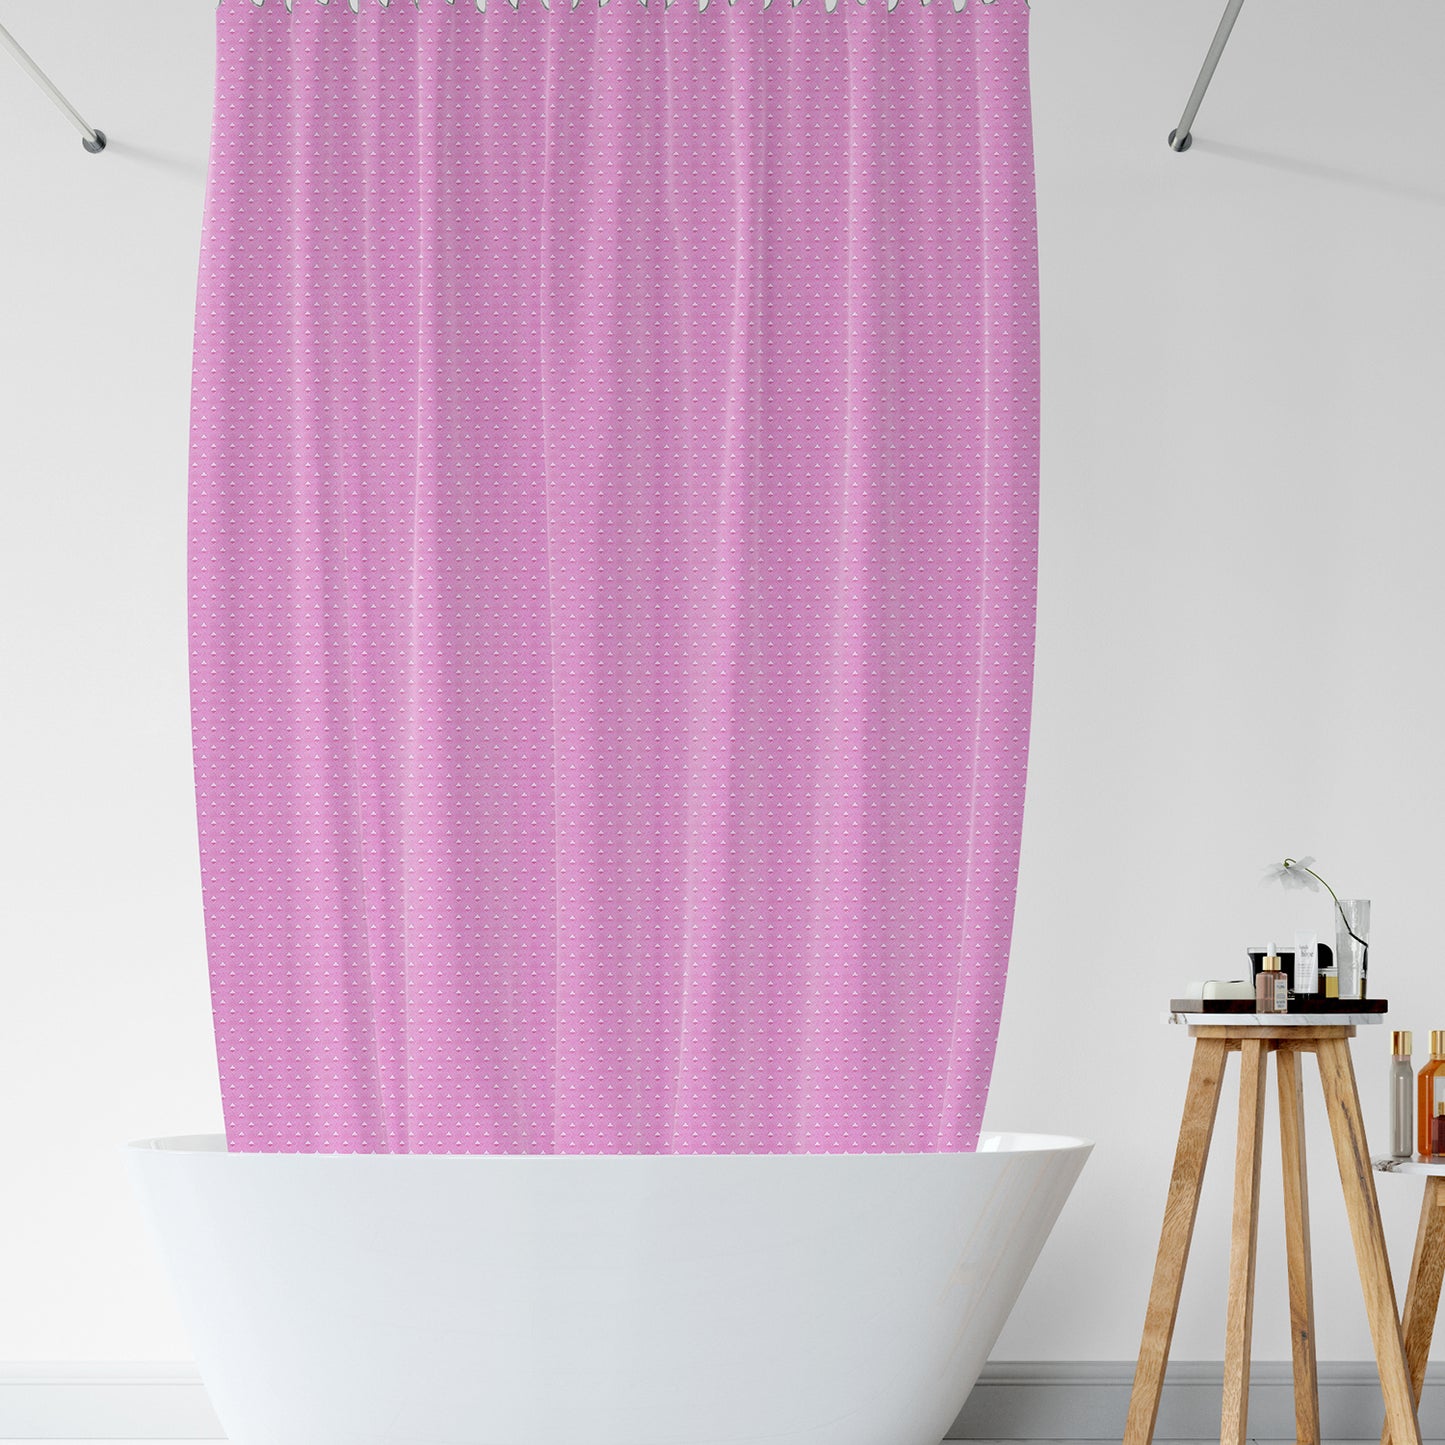 Fabric Curtain for bathtub shower